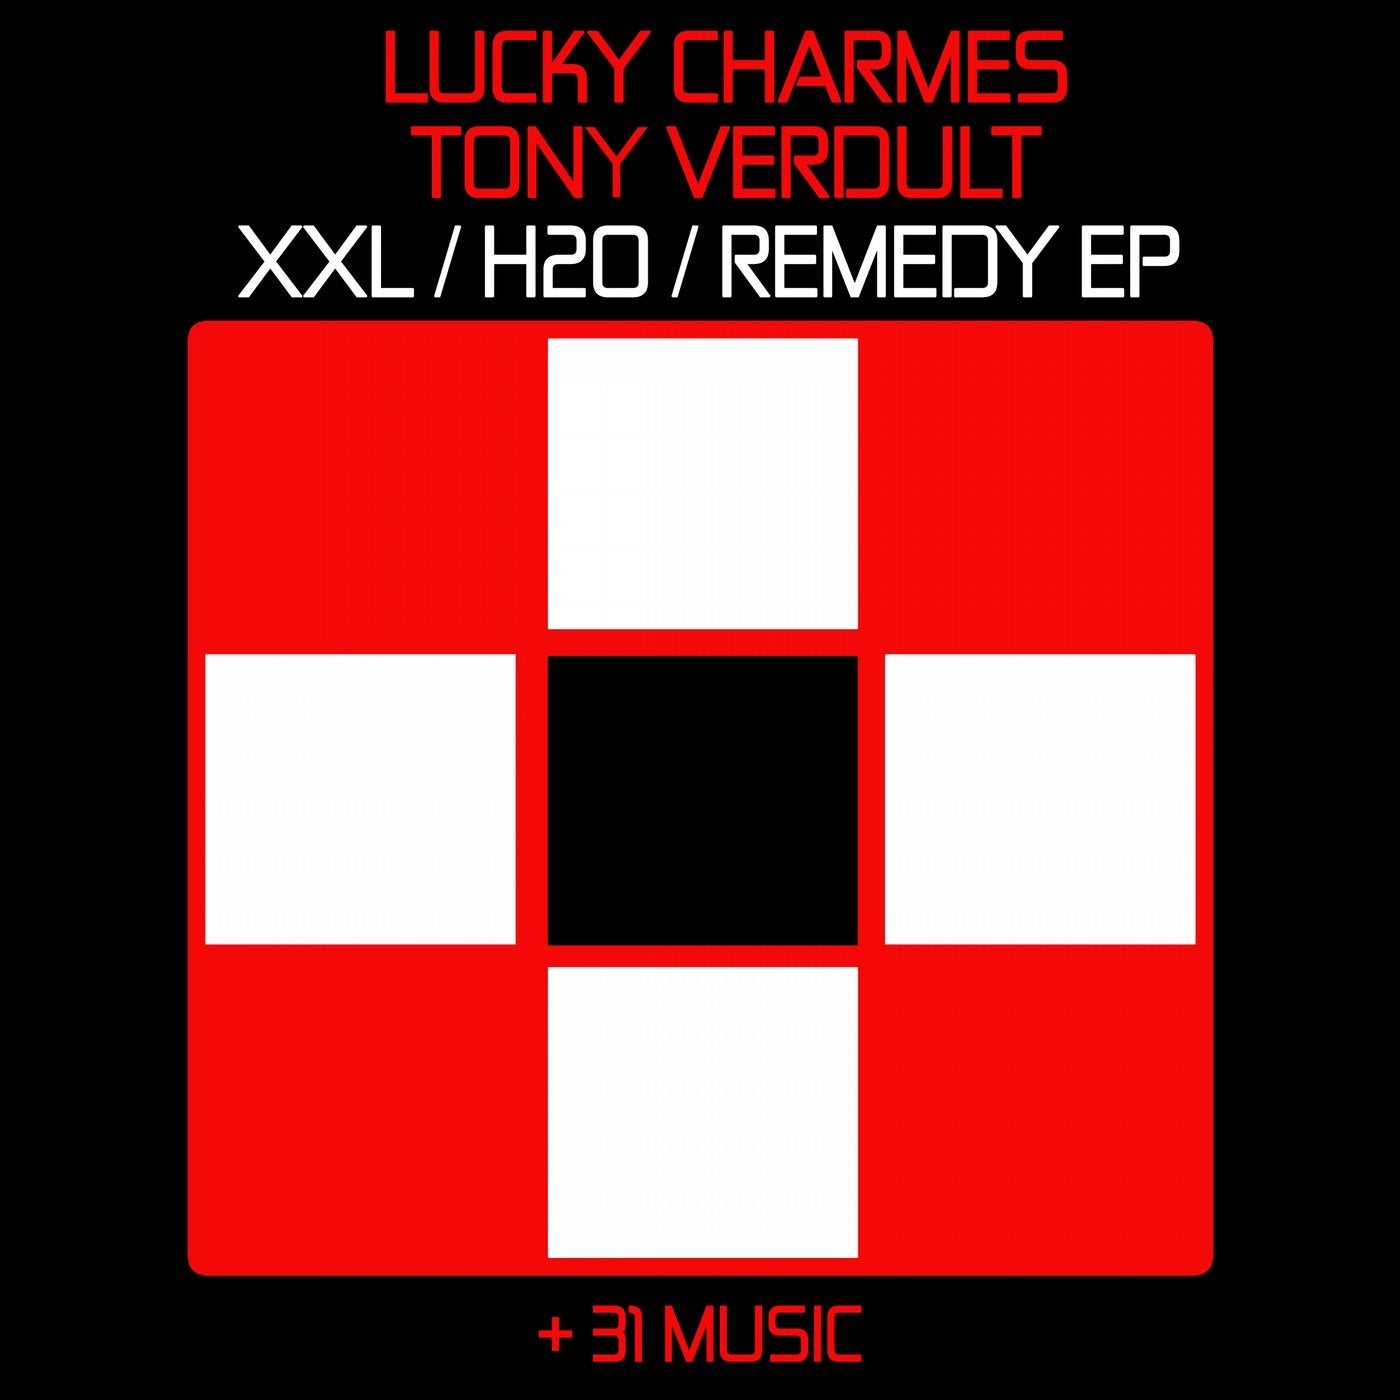 XXL / H2O / Remedy EP